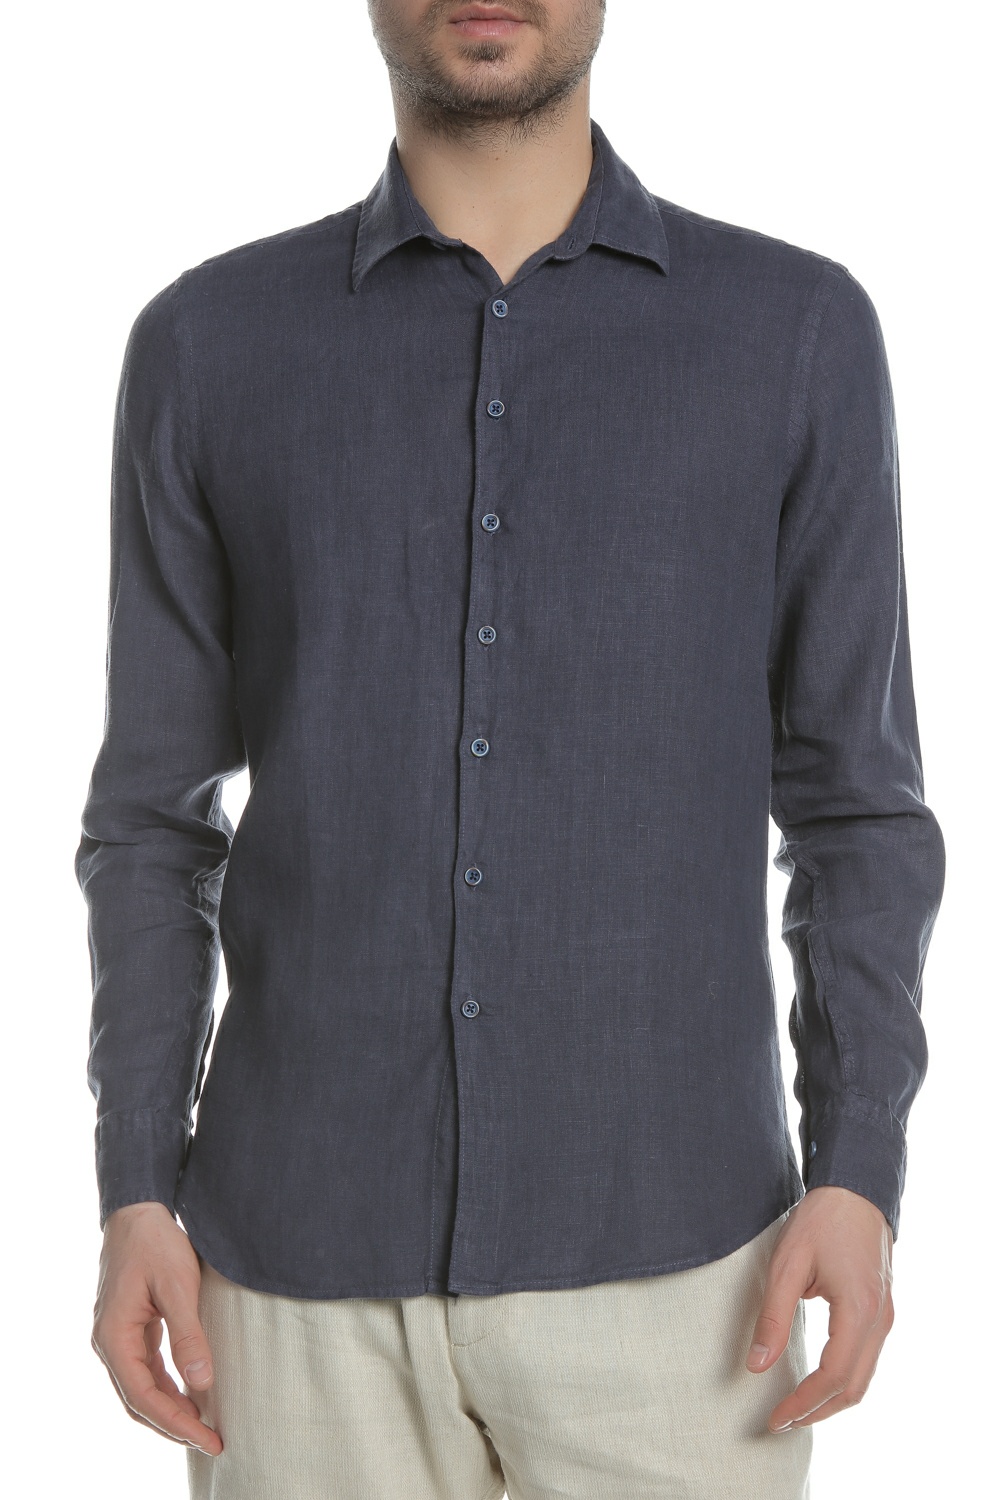 SSEINSE - Ανδρικό μακρυμάνικο λινό πουκάμισο SSEINSE μπλε Ανδρικά/Ρούχα/Πουκάμισα/Μακρυμάνικα